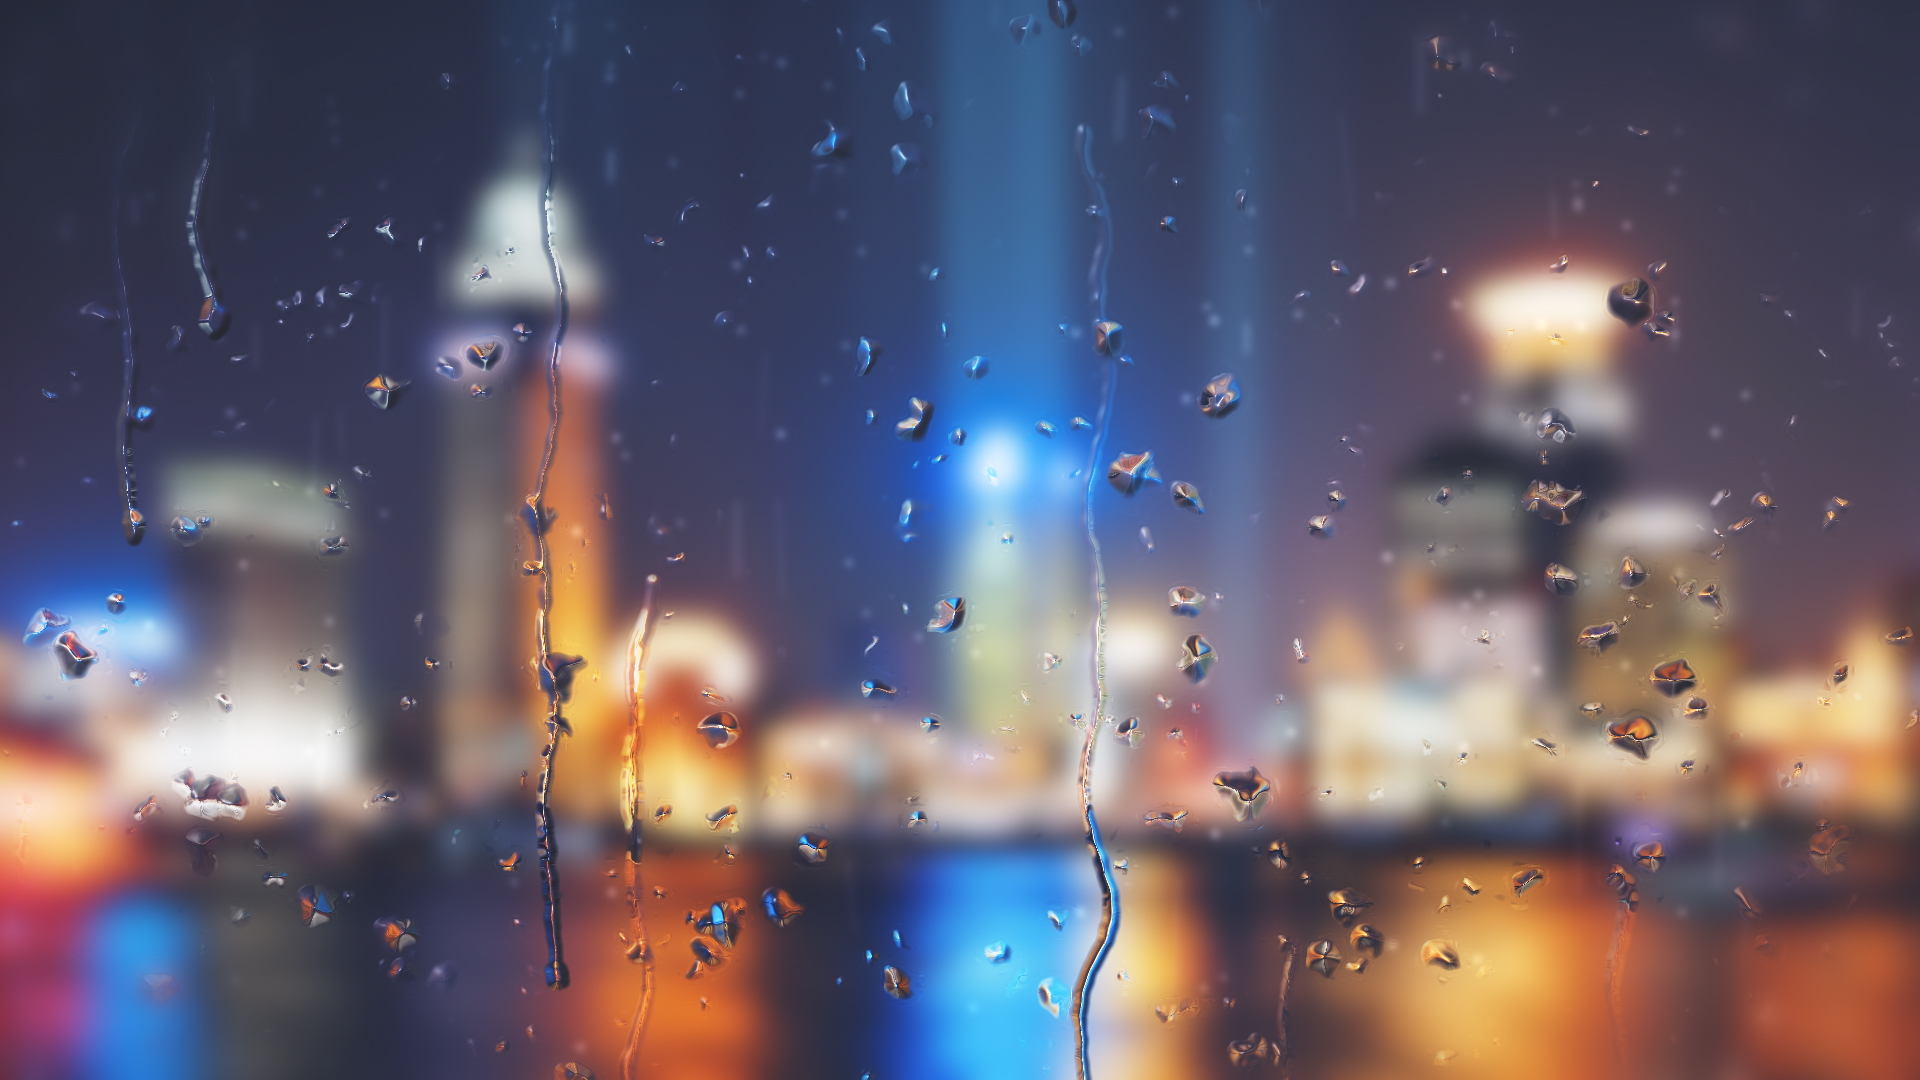 Rainy Day City | Motion Video Background